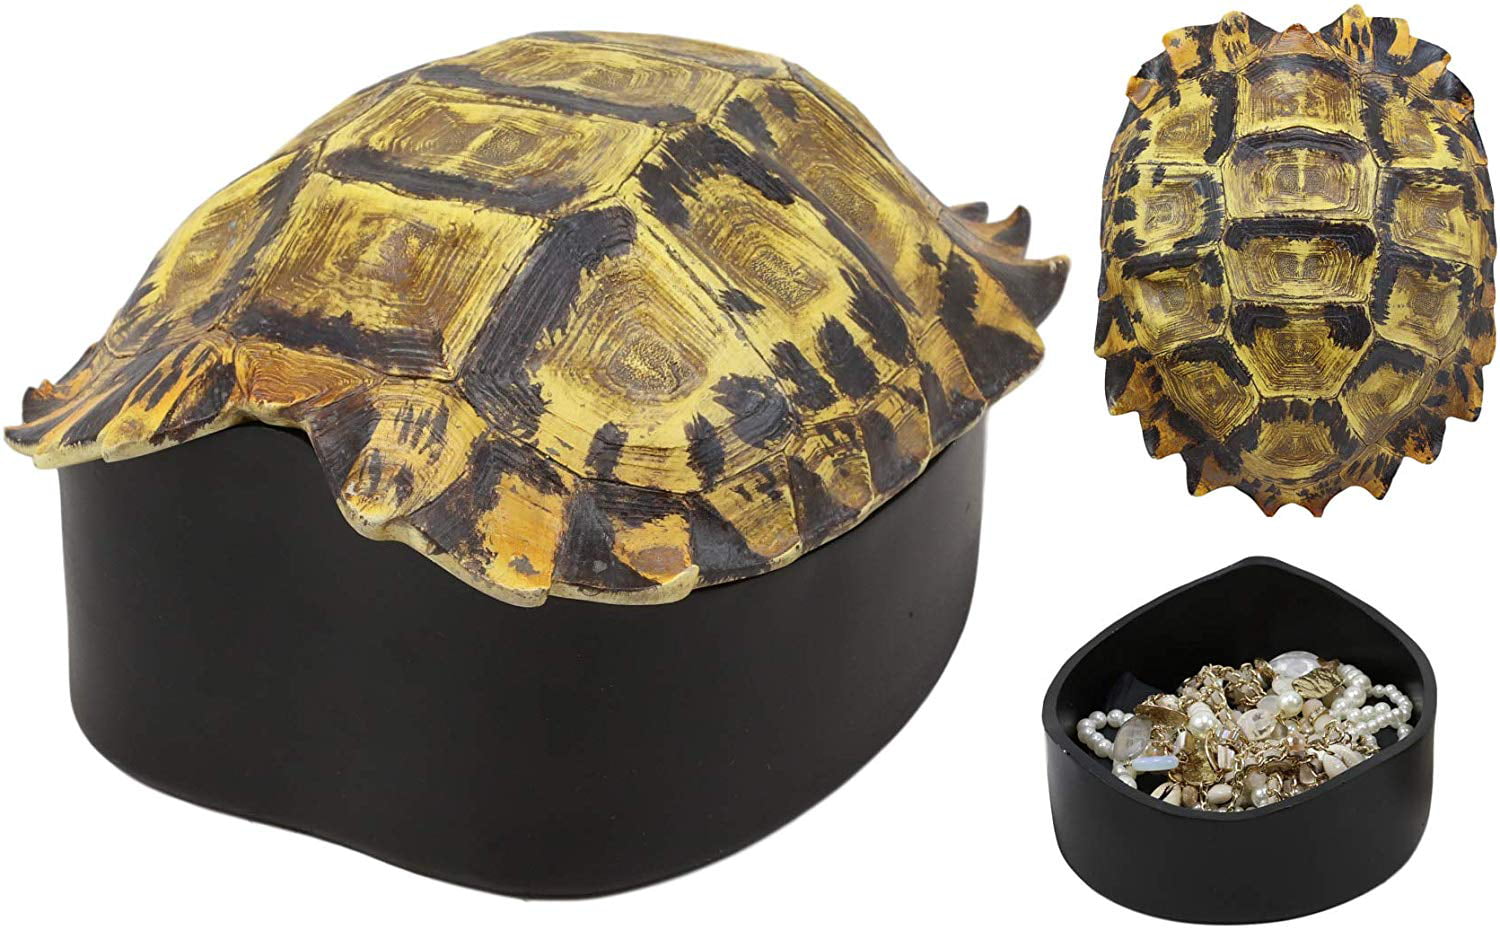 YU FENG Turtle Trinket Box Turtle Figurine Jewelry Boxes Hinged Trinket Boxes